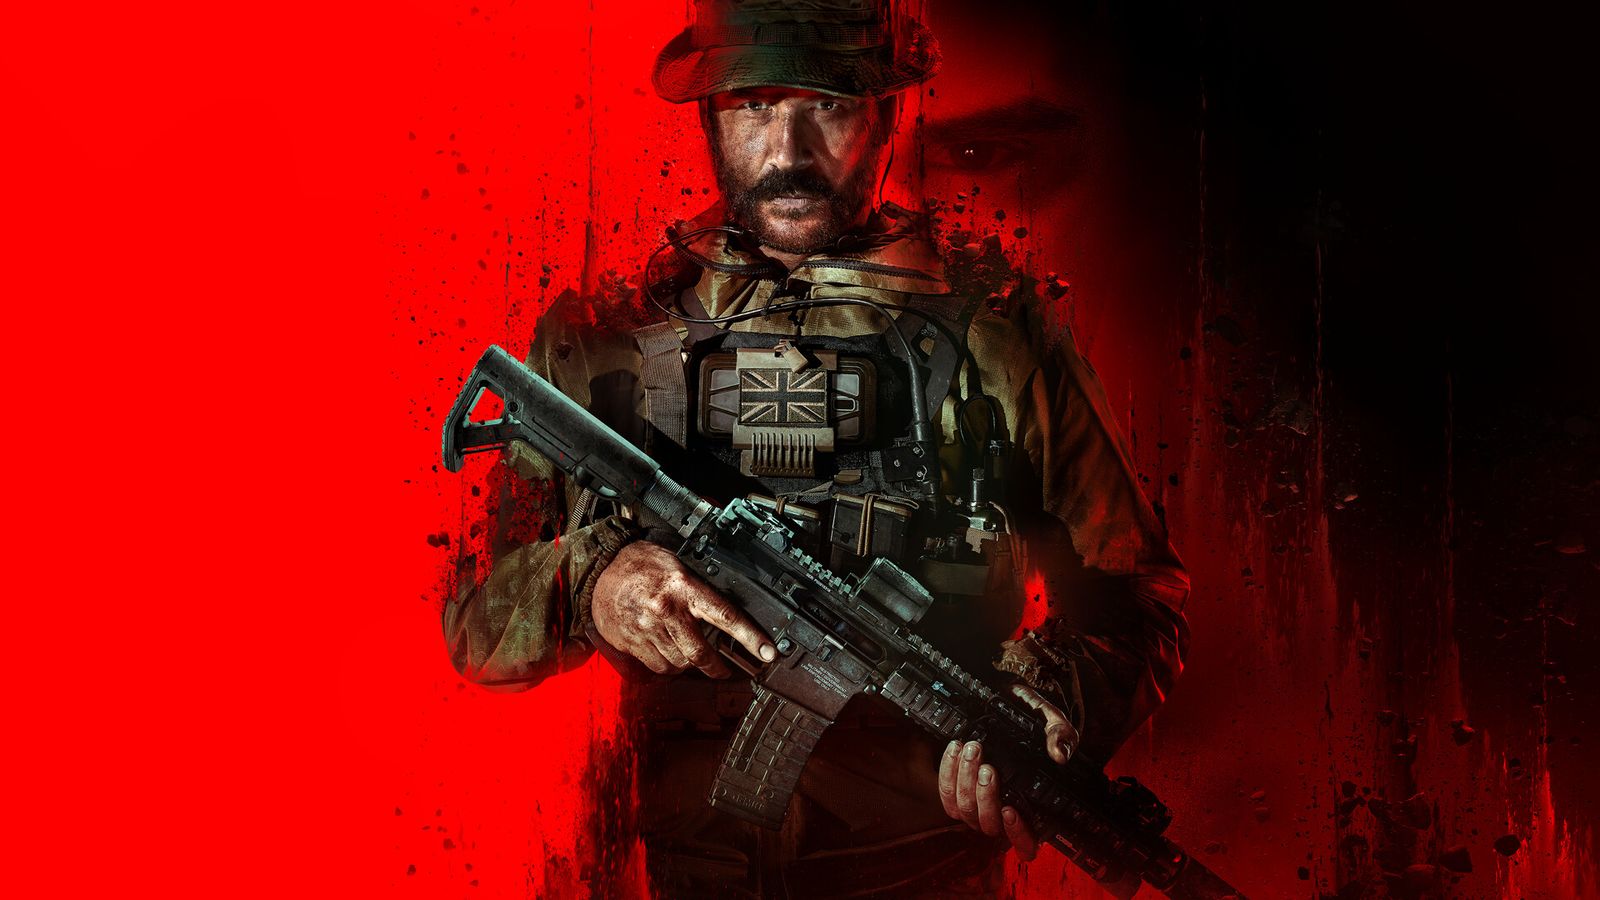 Modern Warfare 3 Captain Price holding gun on red background